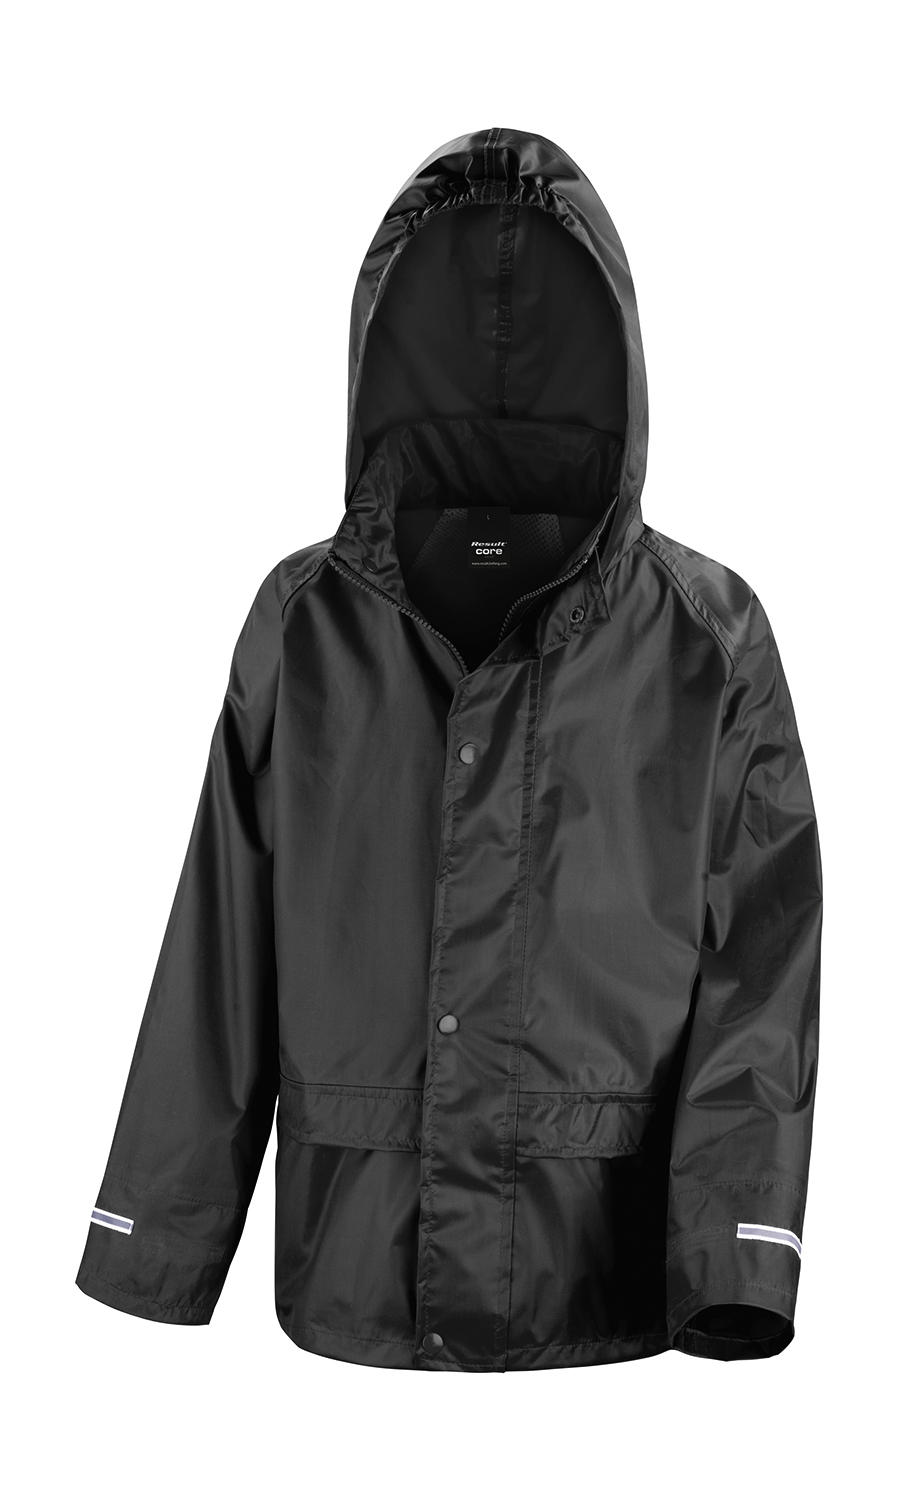  Junior StormDri Jacket in Farbe Black